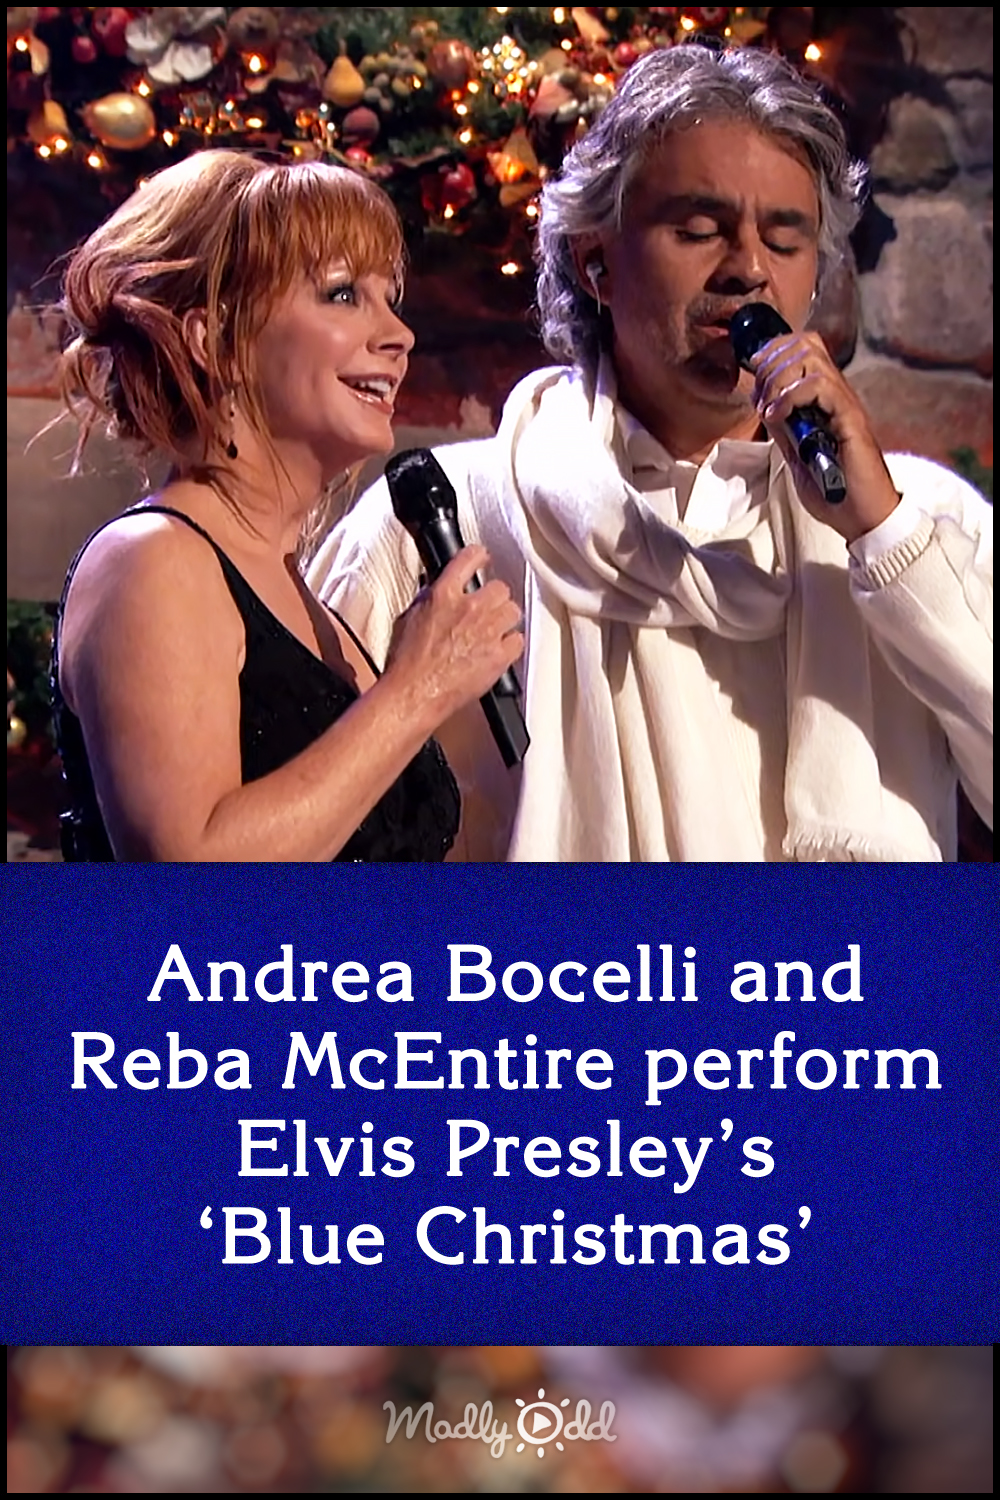 Andrea Bocelli and Reba McEntire perform Elvis Presley’s ‘Blue Christmas’